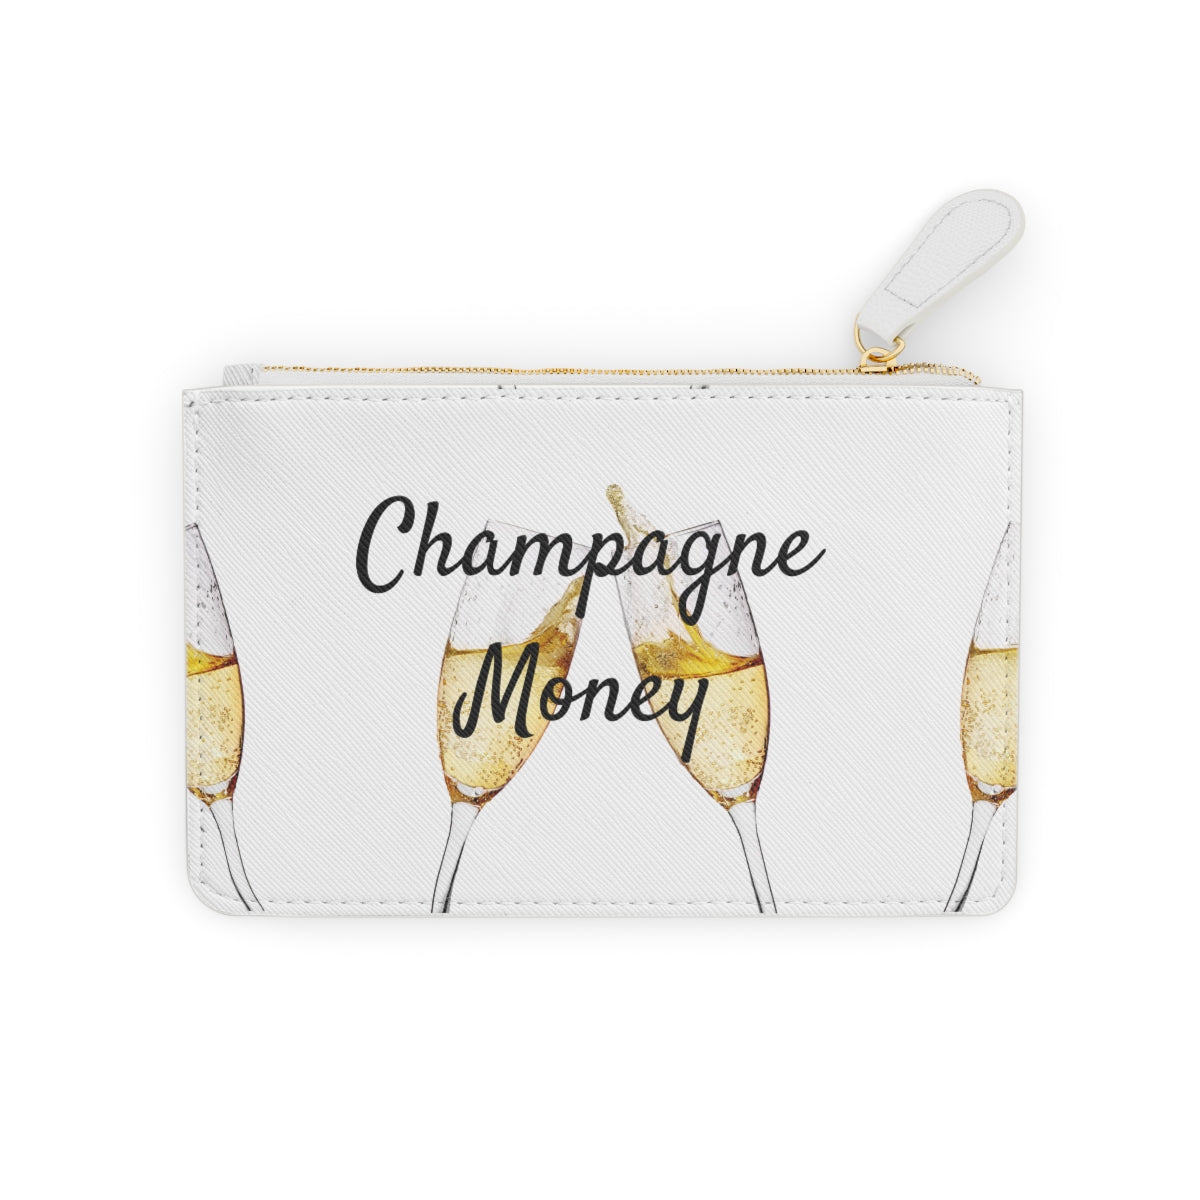 Champagne Money Mini Clutch Bag